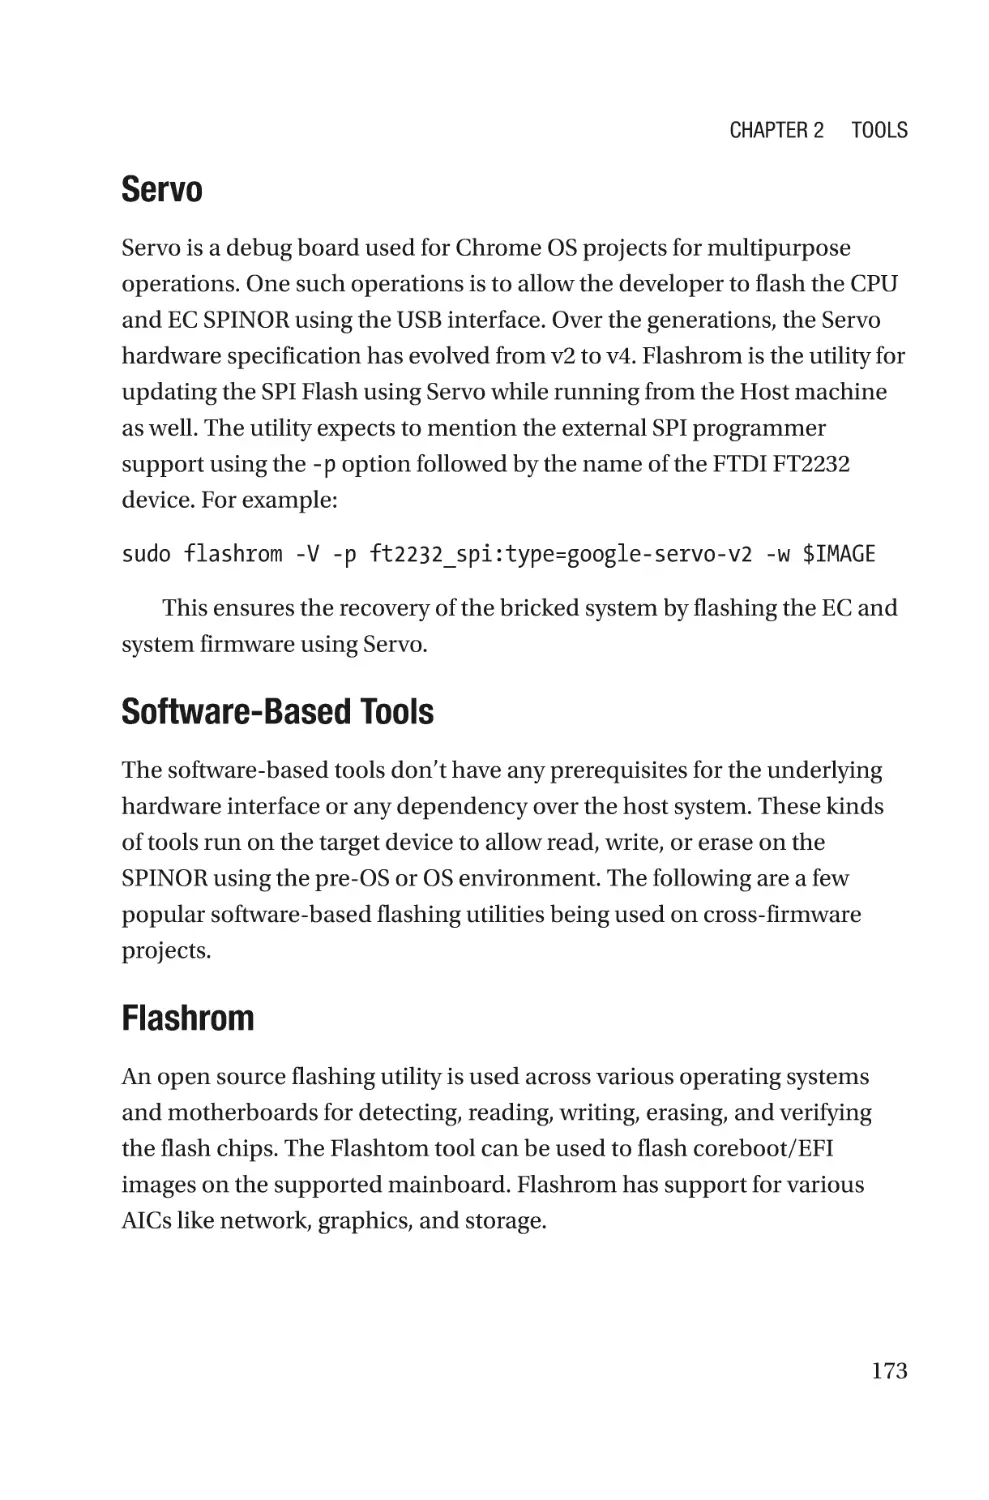 Servo
Software-Based Tools
Flashrom